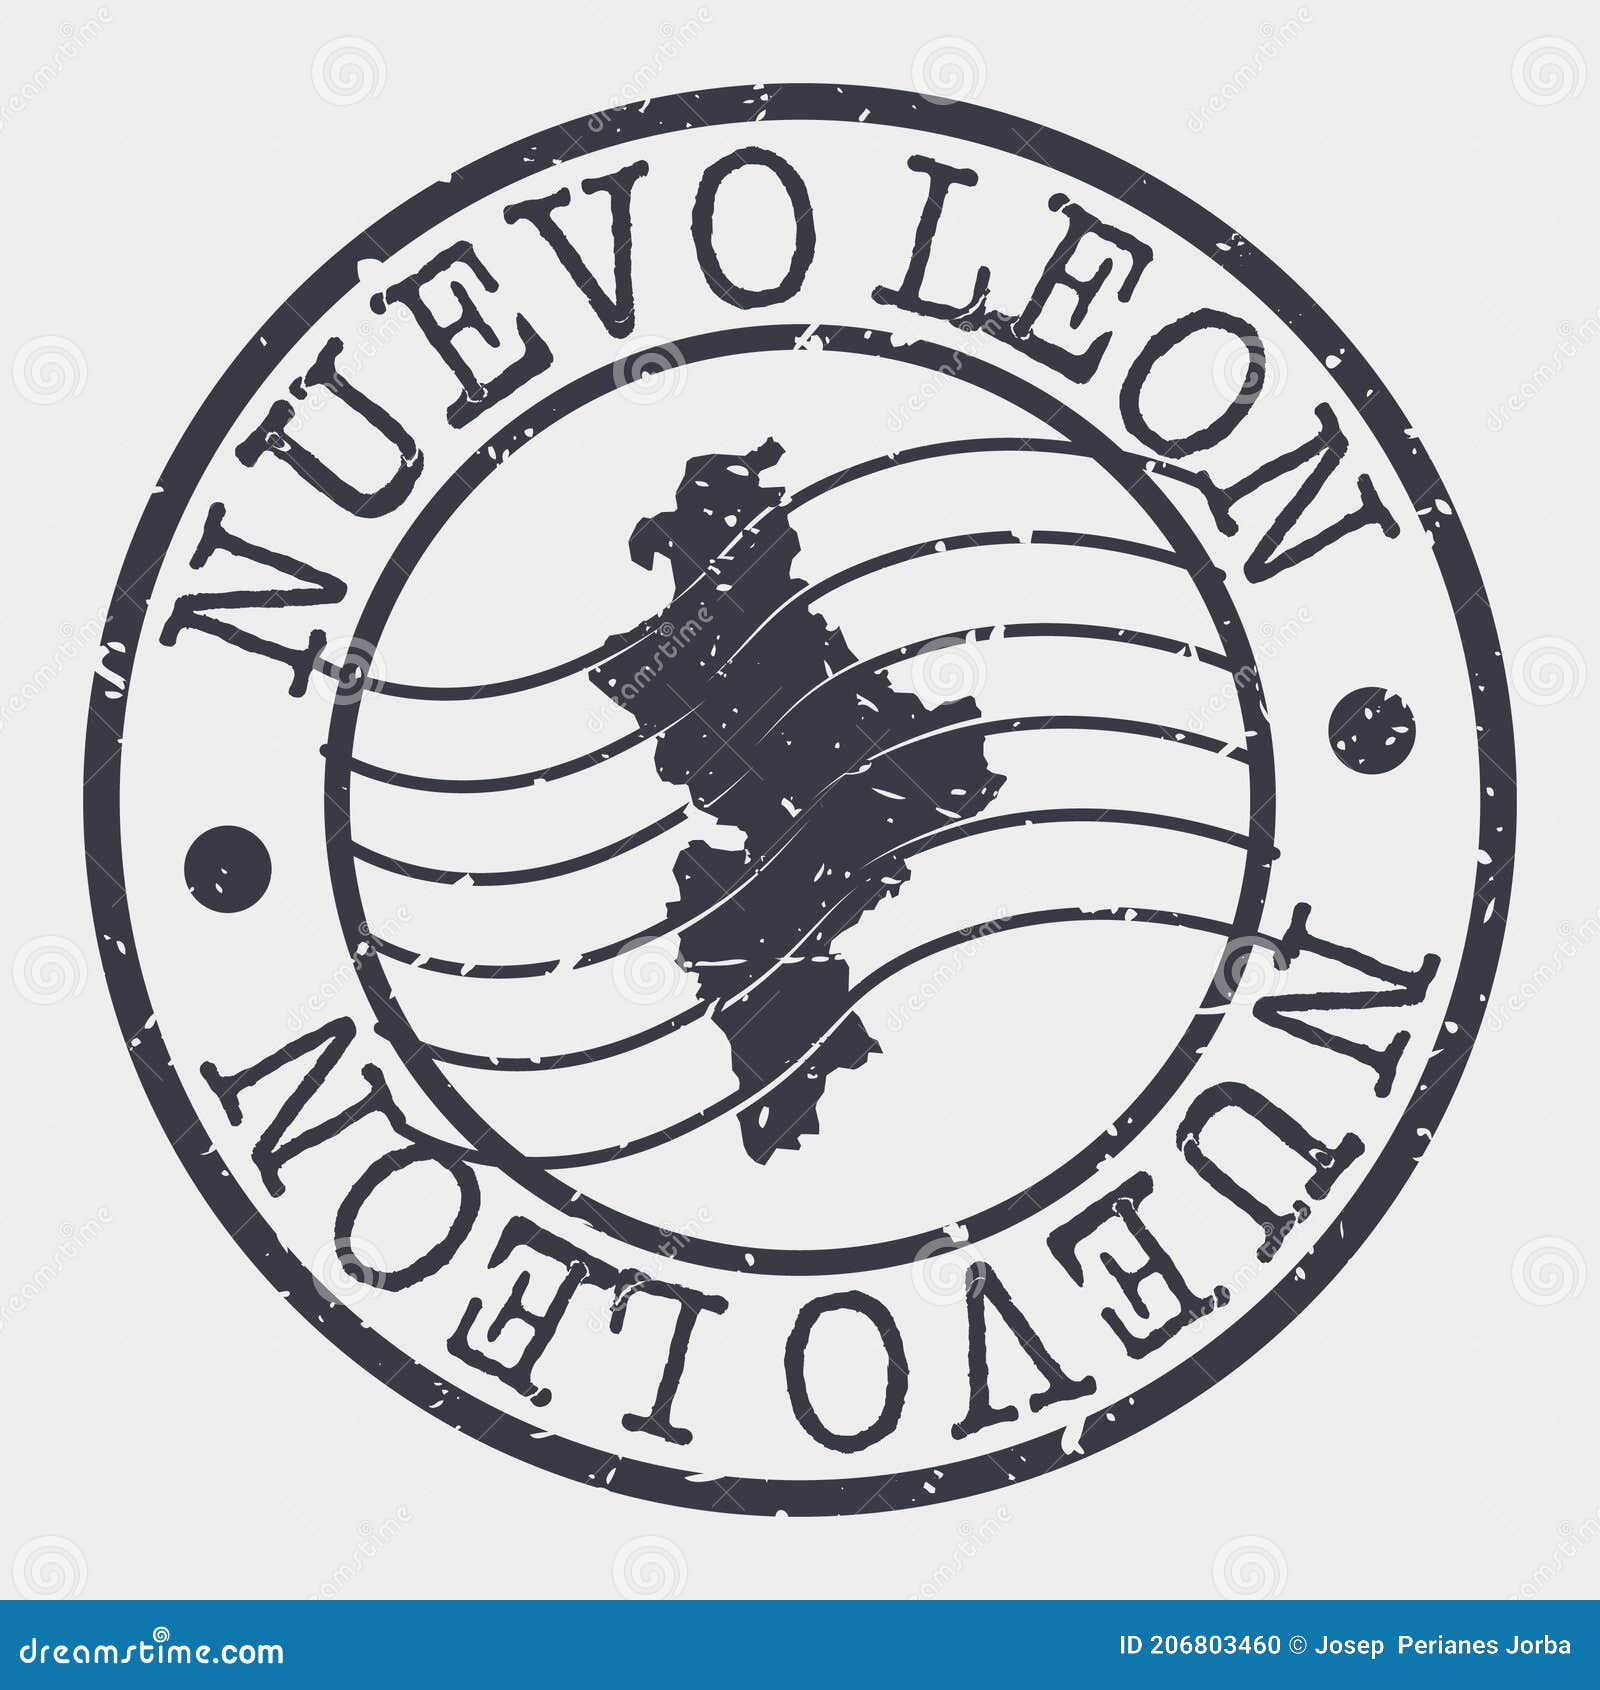 nuevo leon, mexico stamp postal. a map silhouette seal. passport round .  icon  retro travel.